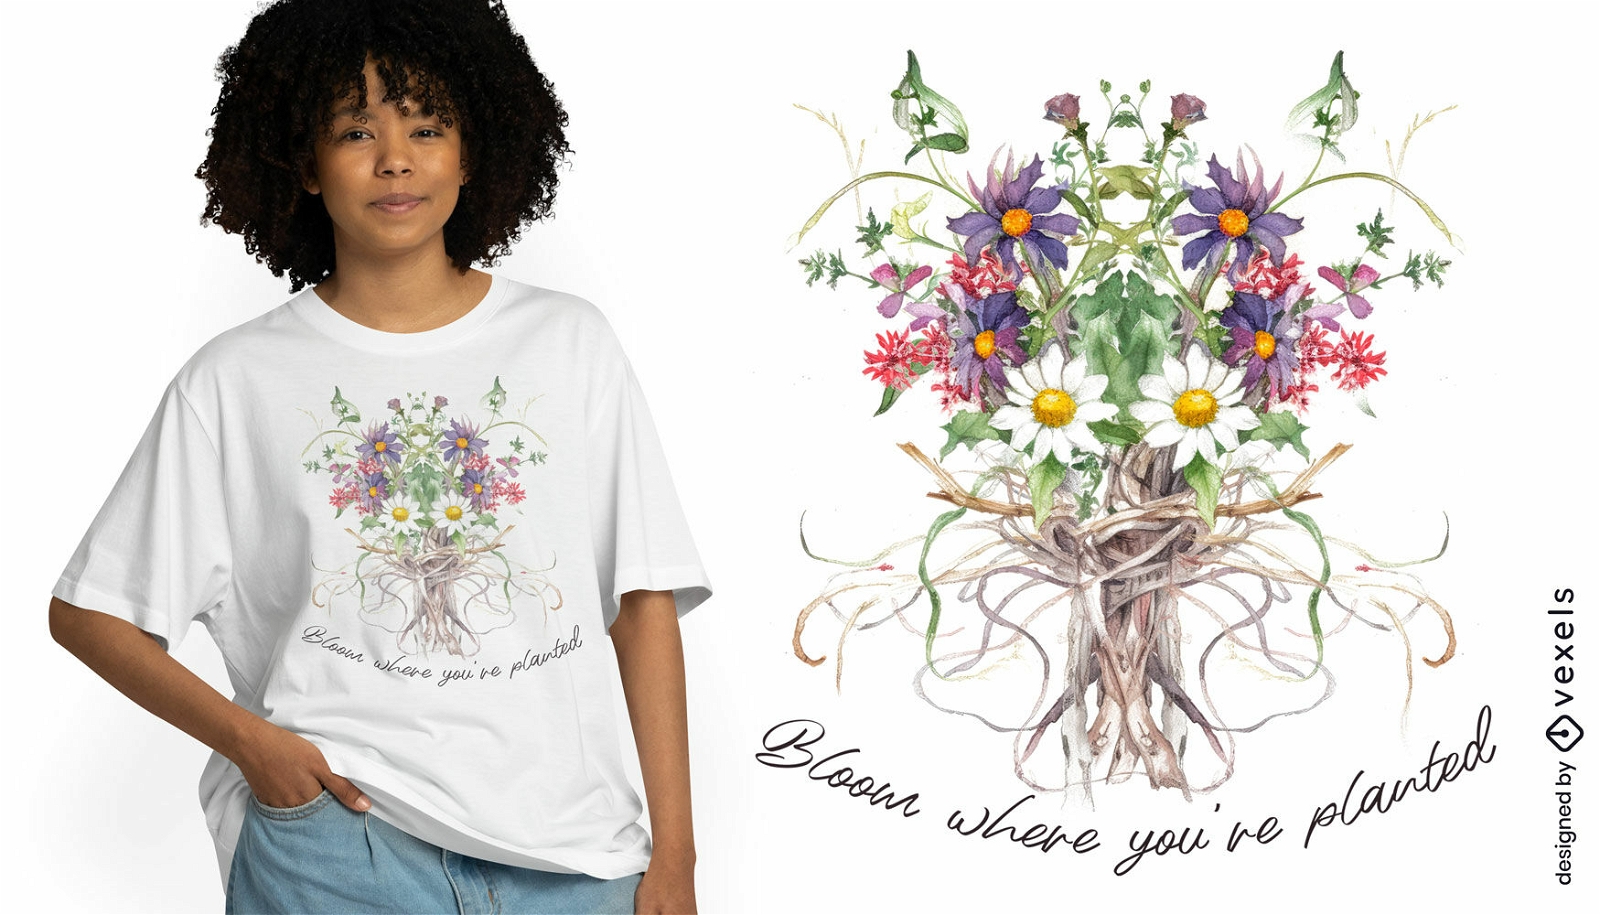 Blumenstrau?-Illustrations-T-Shirt-Design